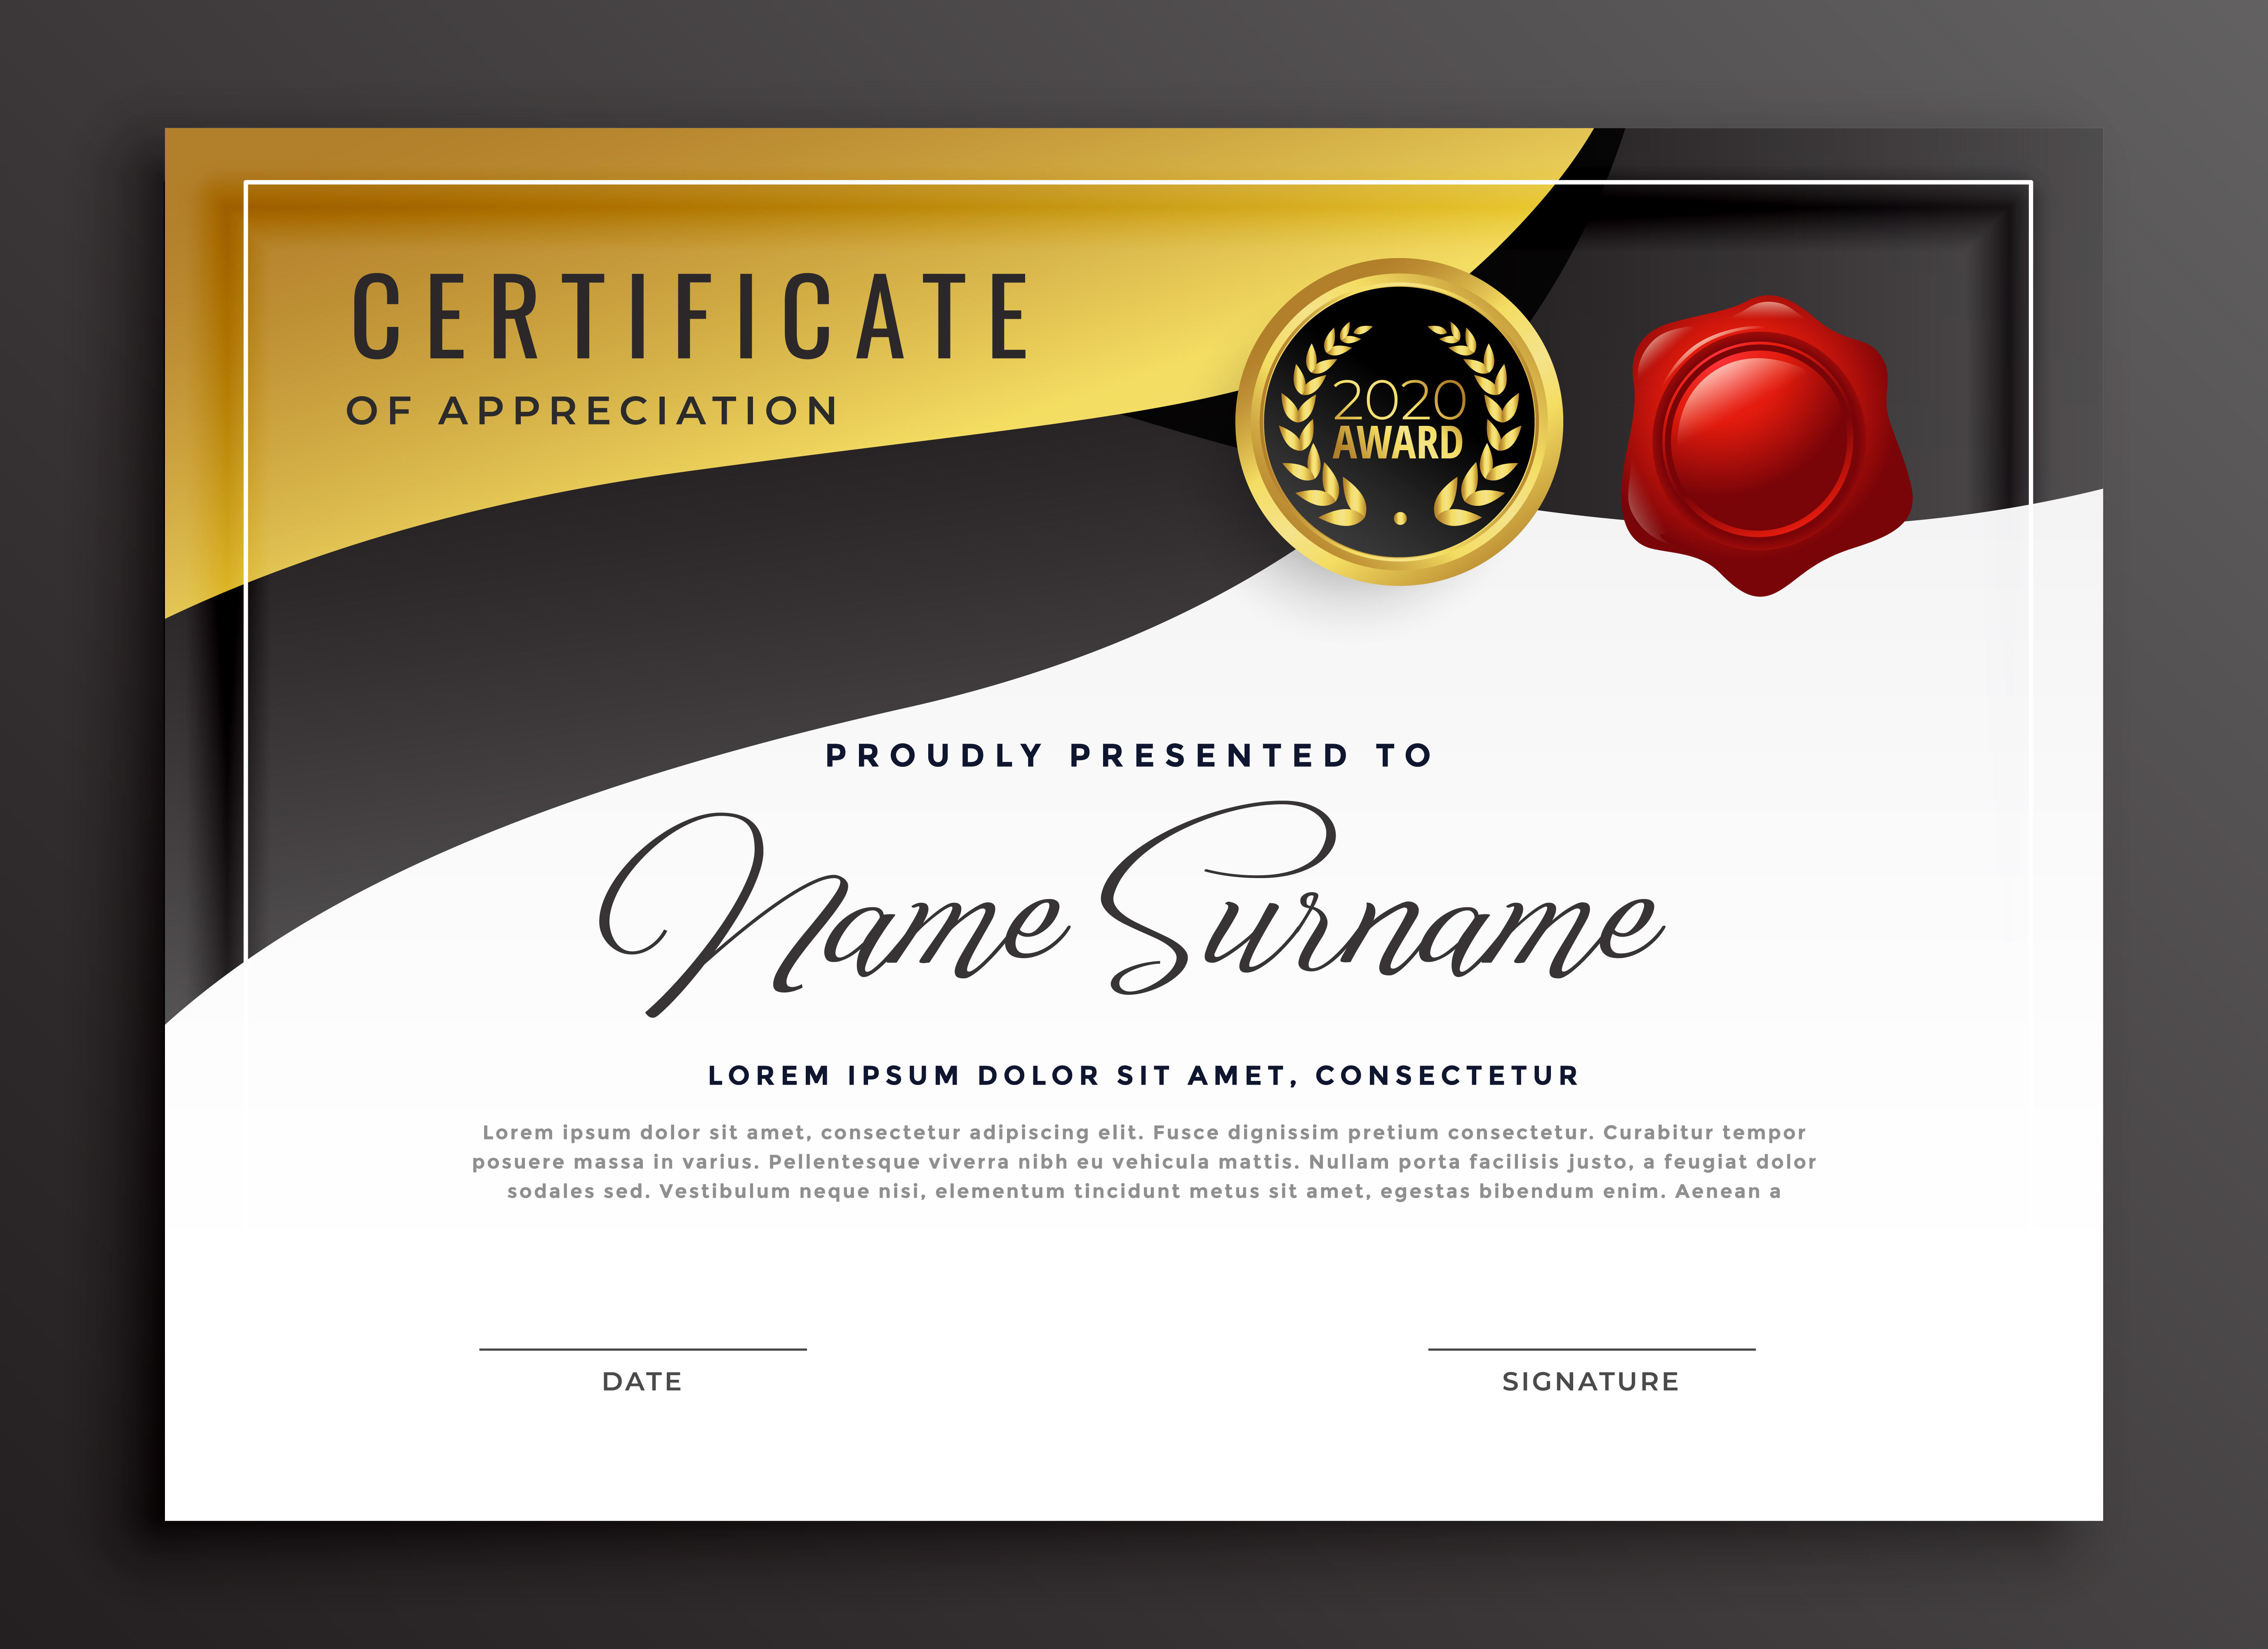 Golden Certificate Of Appreciation Template Download Free Vector Art Stock Graphics Images